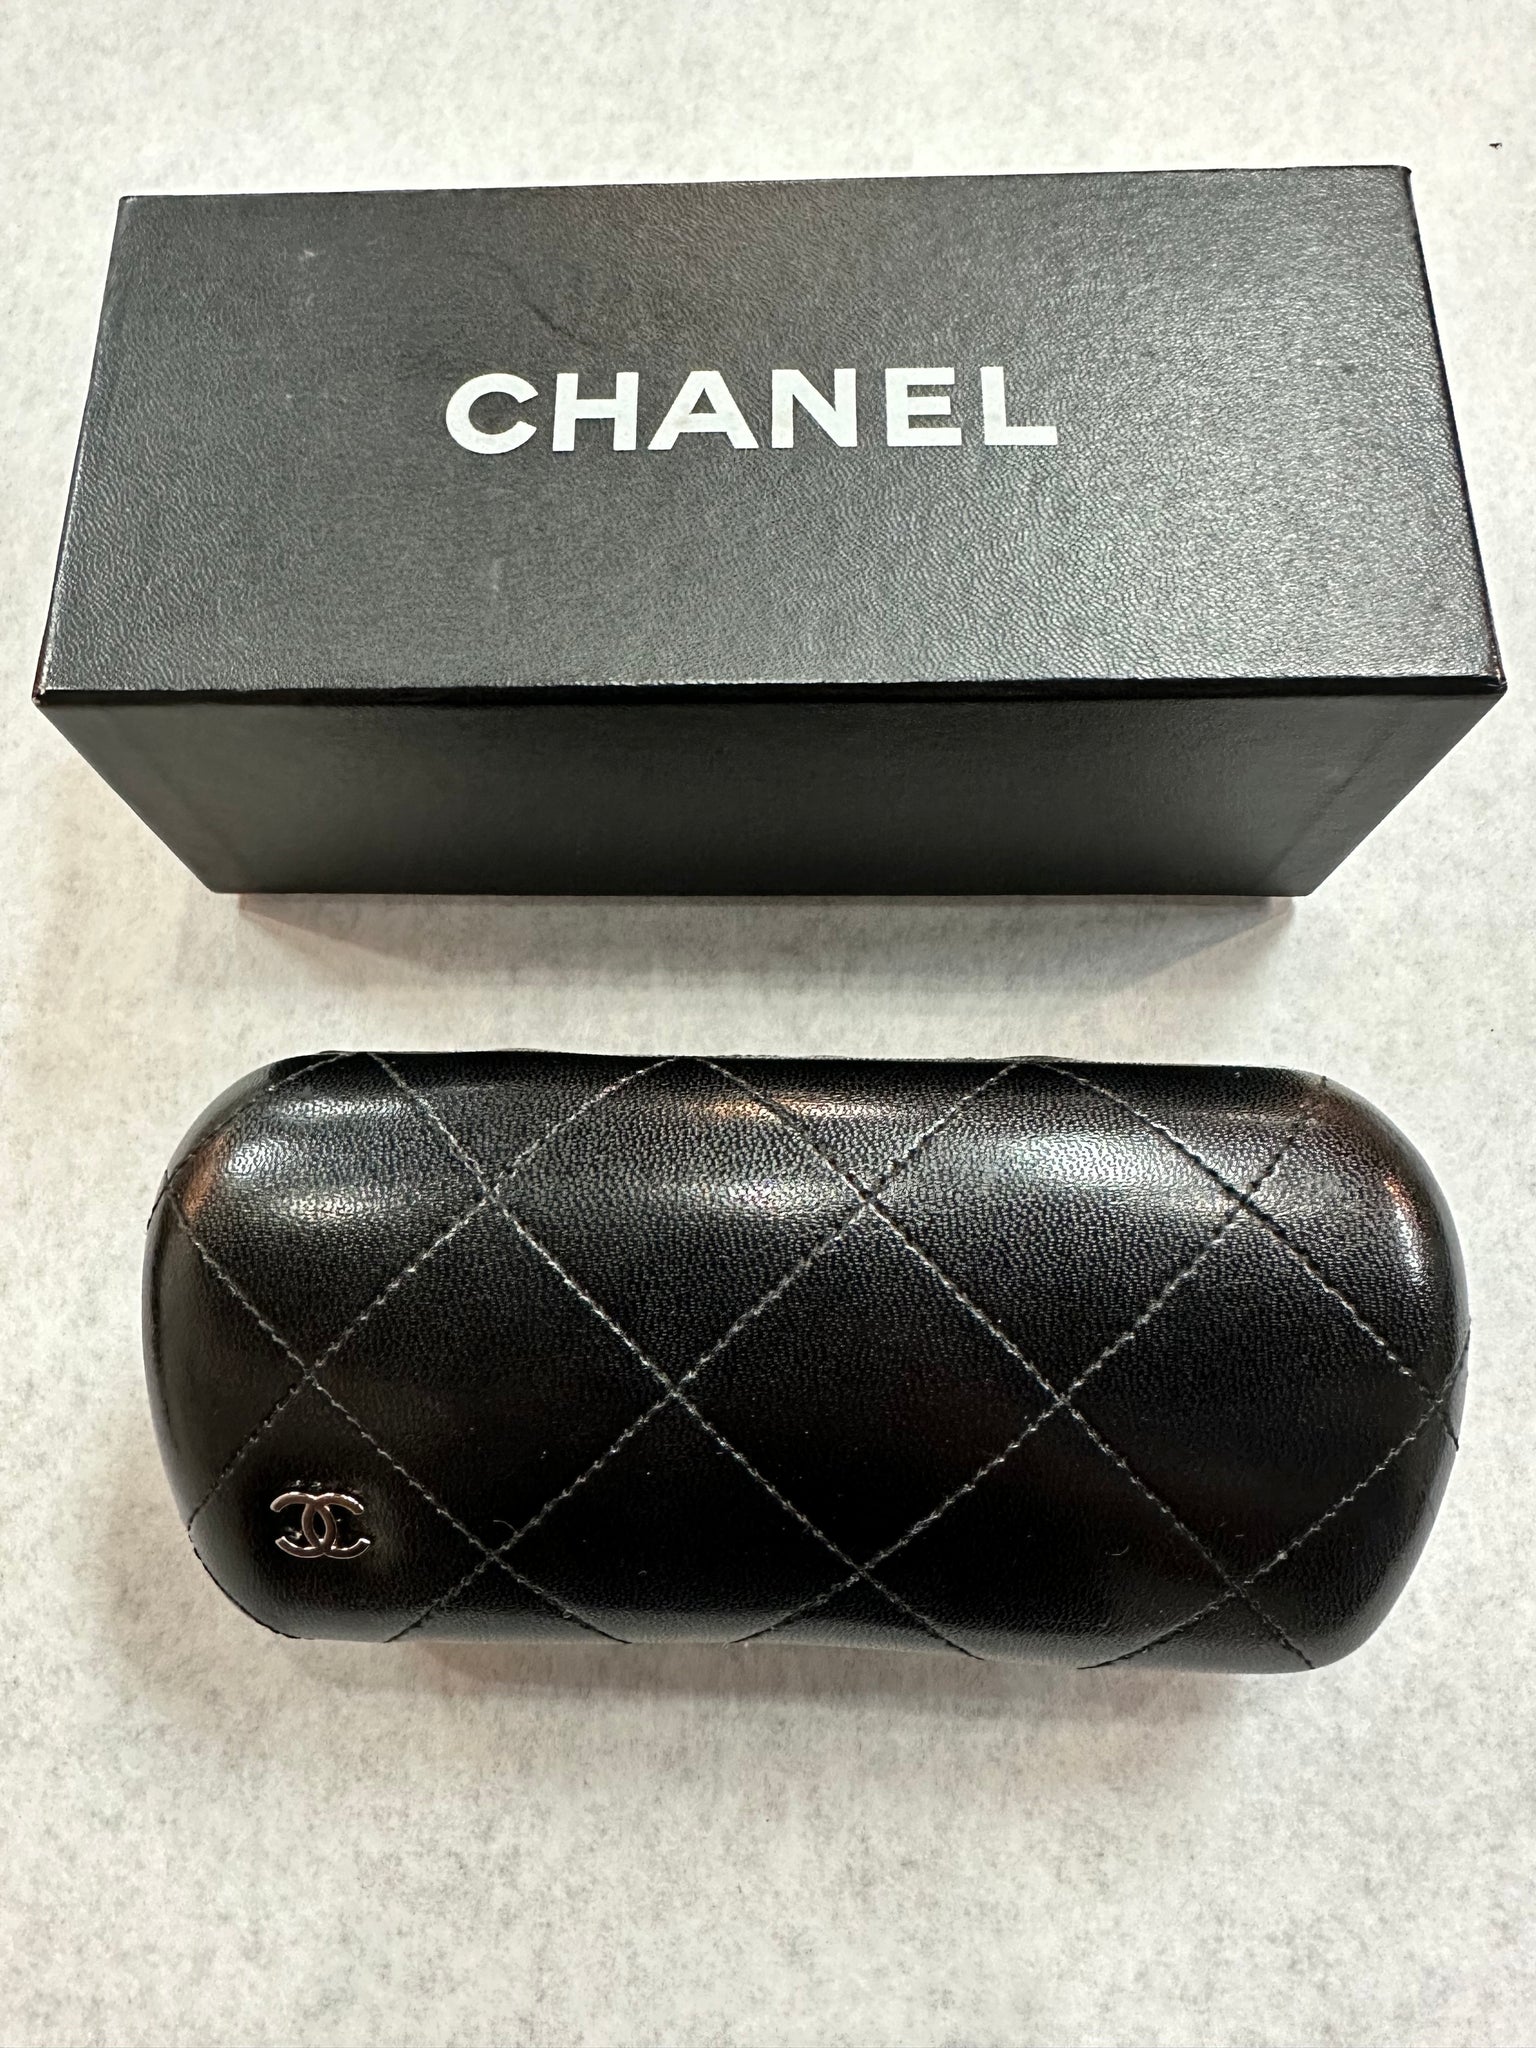 Authentic Chanel Sunglasses Camelia Black 5113A – Relics to Rhinestones